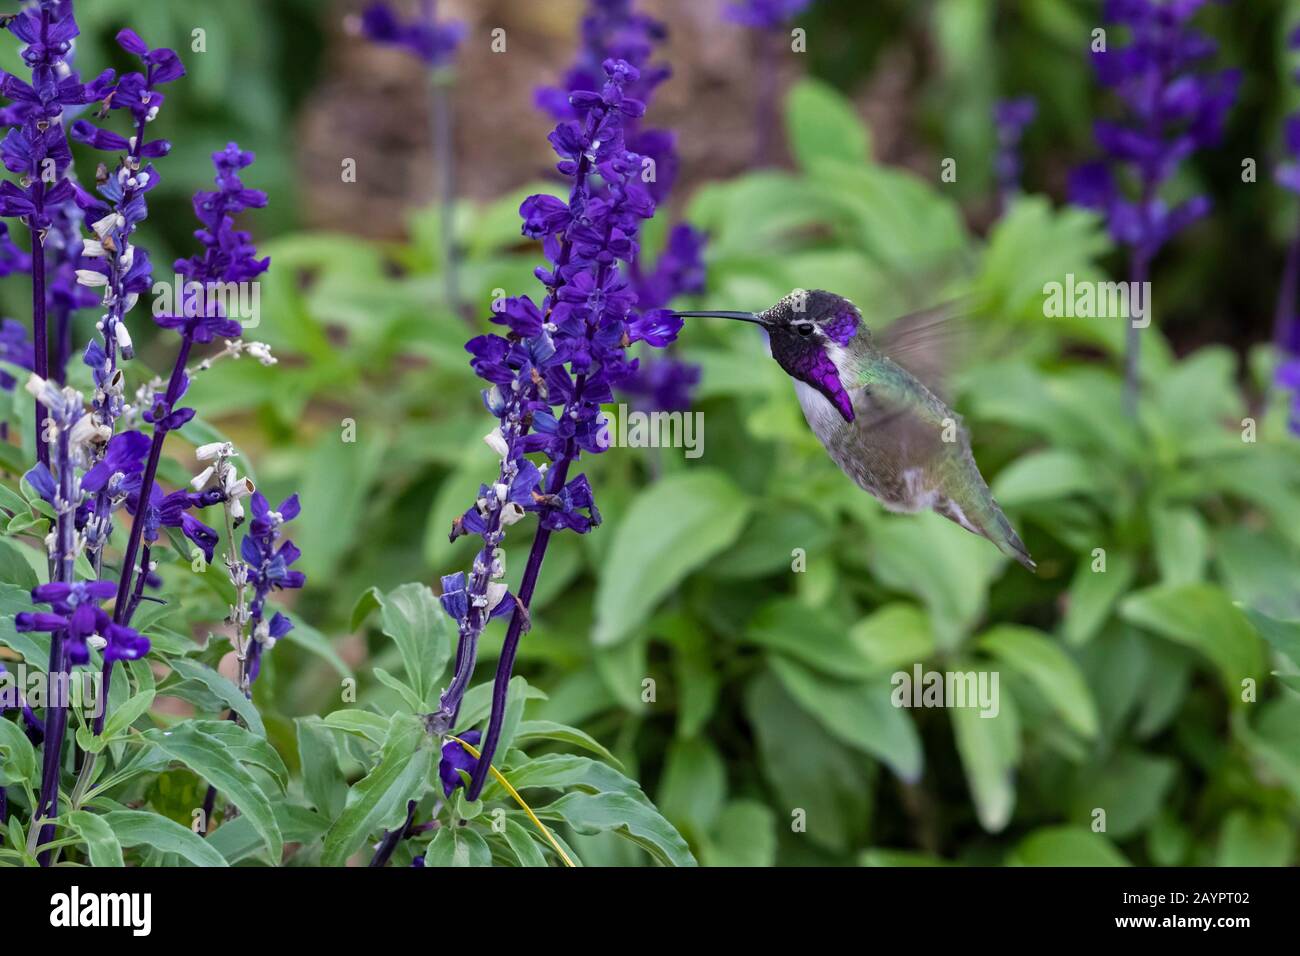 Costa's Hummingbird (calypte costae) hovering; bright purple head, feeding on purple flowers. In Arizona's Sonoran desert. Stock Photo